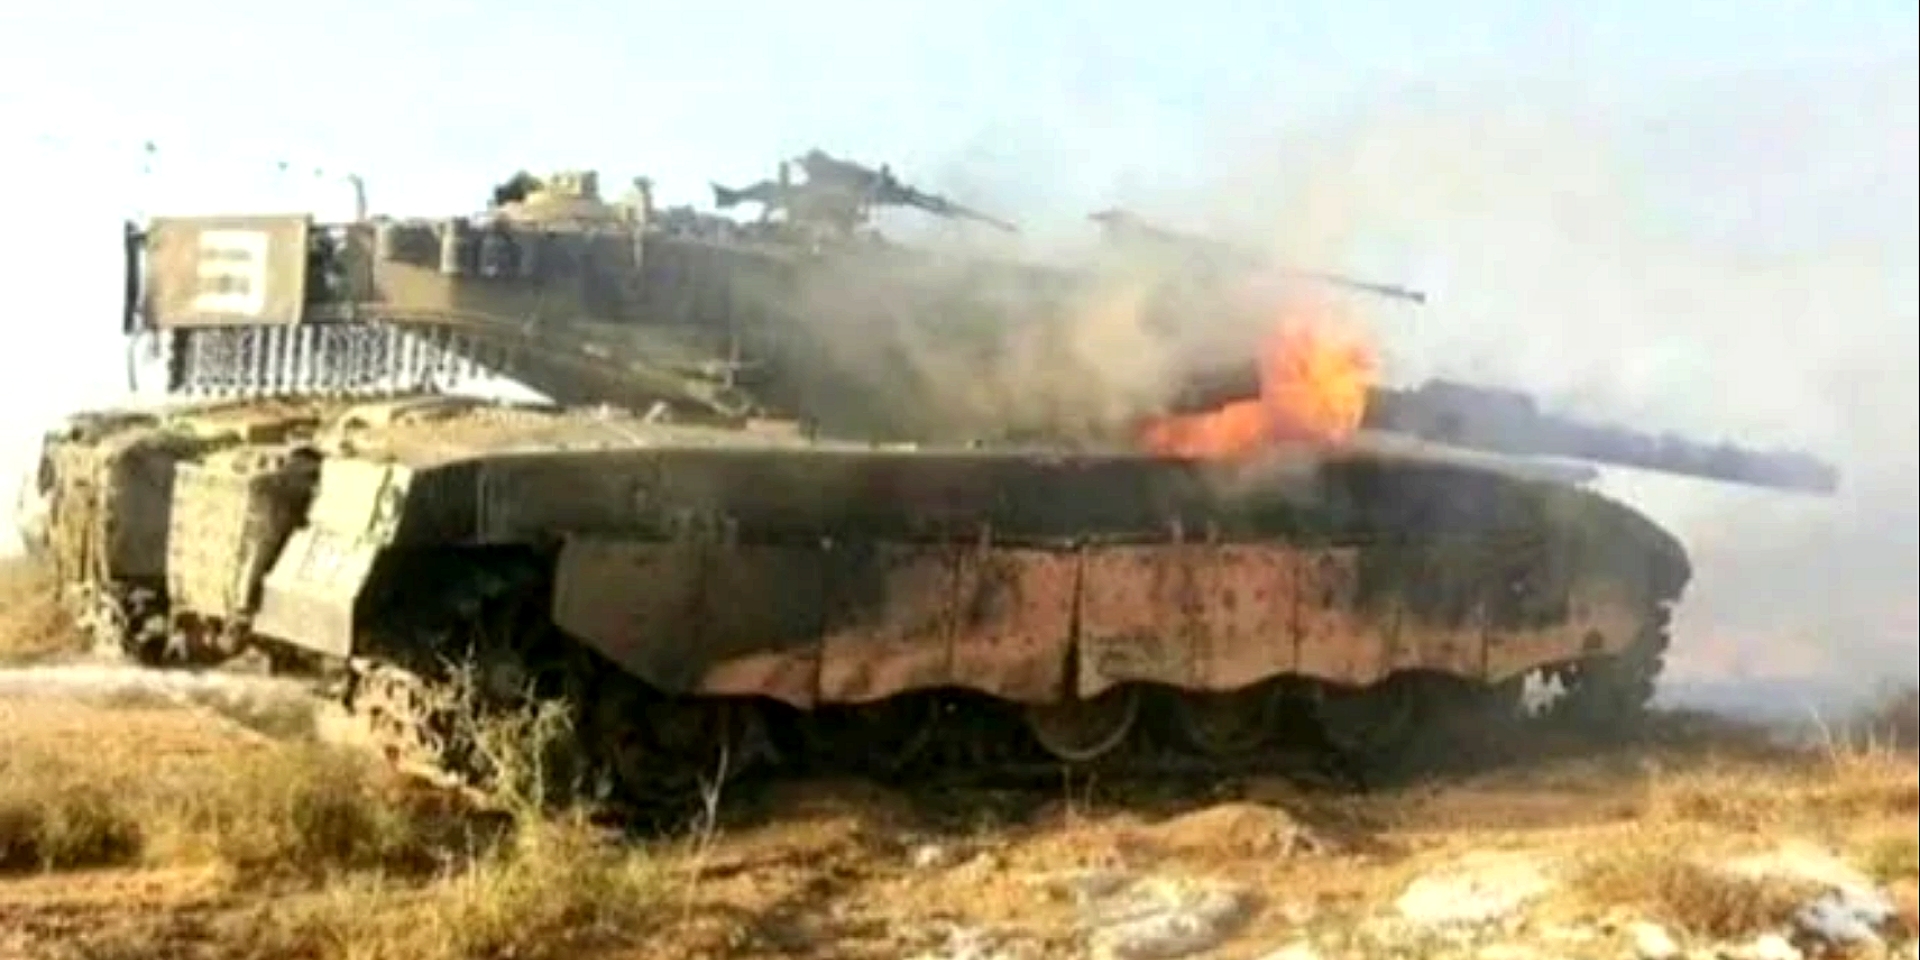 Puluhan unit Tank Tempur Utama (MBT) Merkava Mark IV berteknologi canggih, hancur total akibat serangan rudal anti-tank dan peluncur roket (RPG) sayap militer Hamas, Brigade Izz ad-Din al-Qassam.